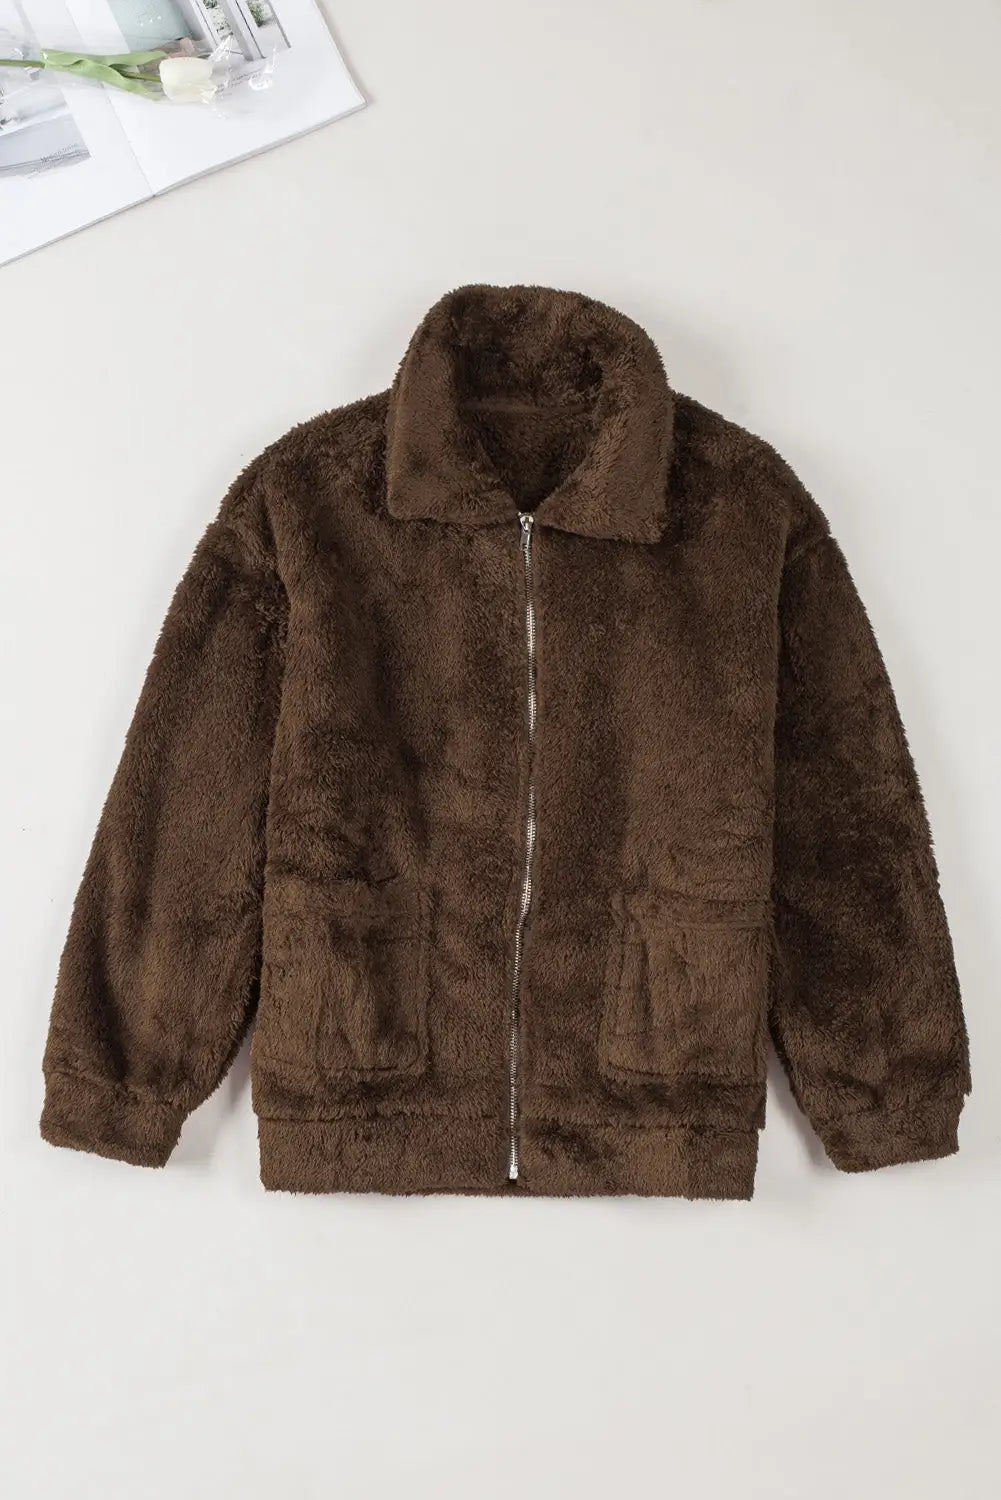 Fleece zipper up casual pocketed coat - outerwear